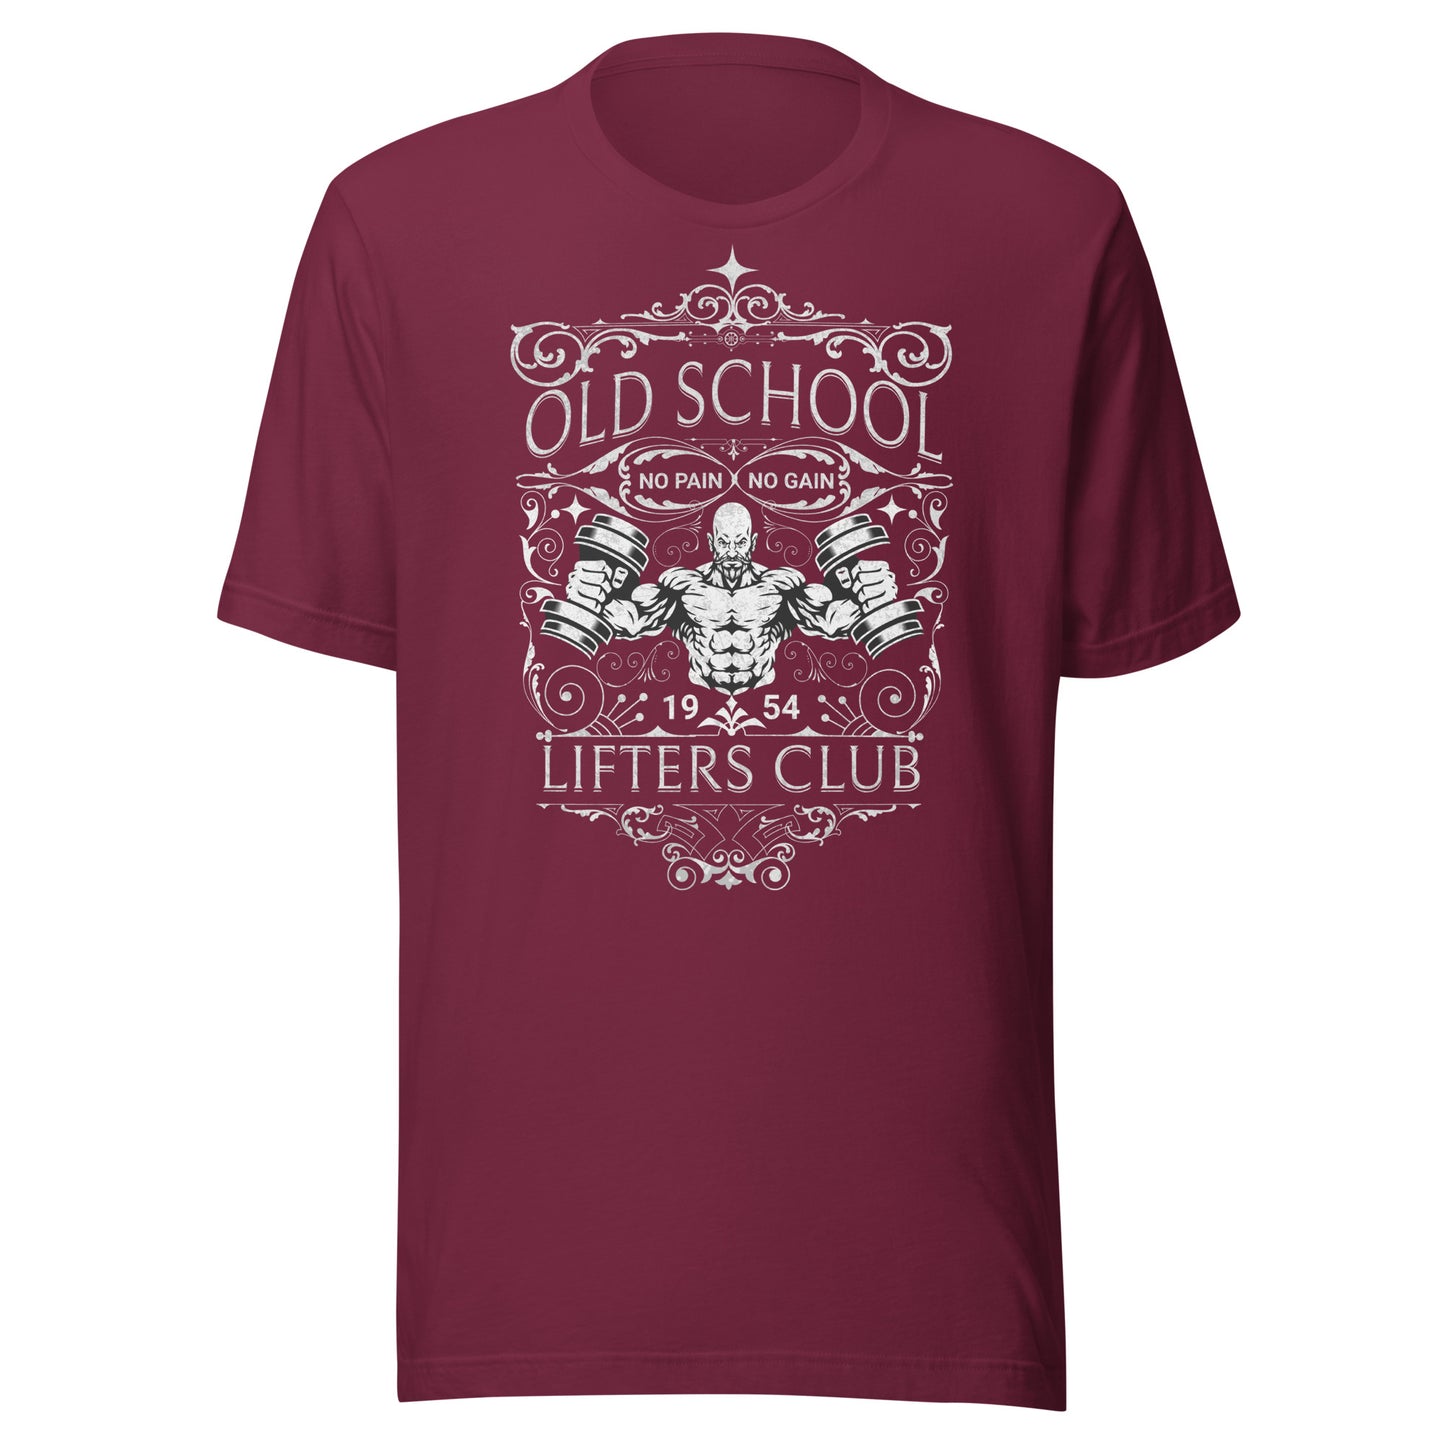 Old School Lifters Club: No Pain No Gain Unisex T-shirt